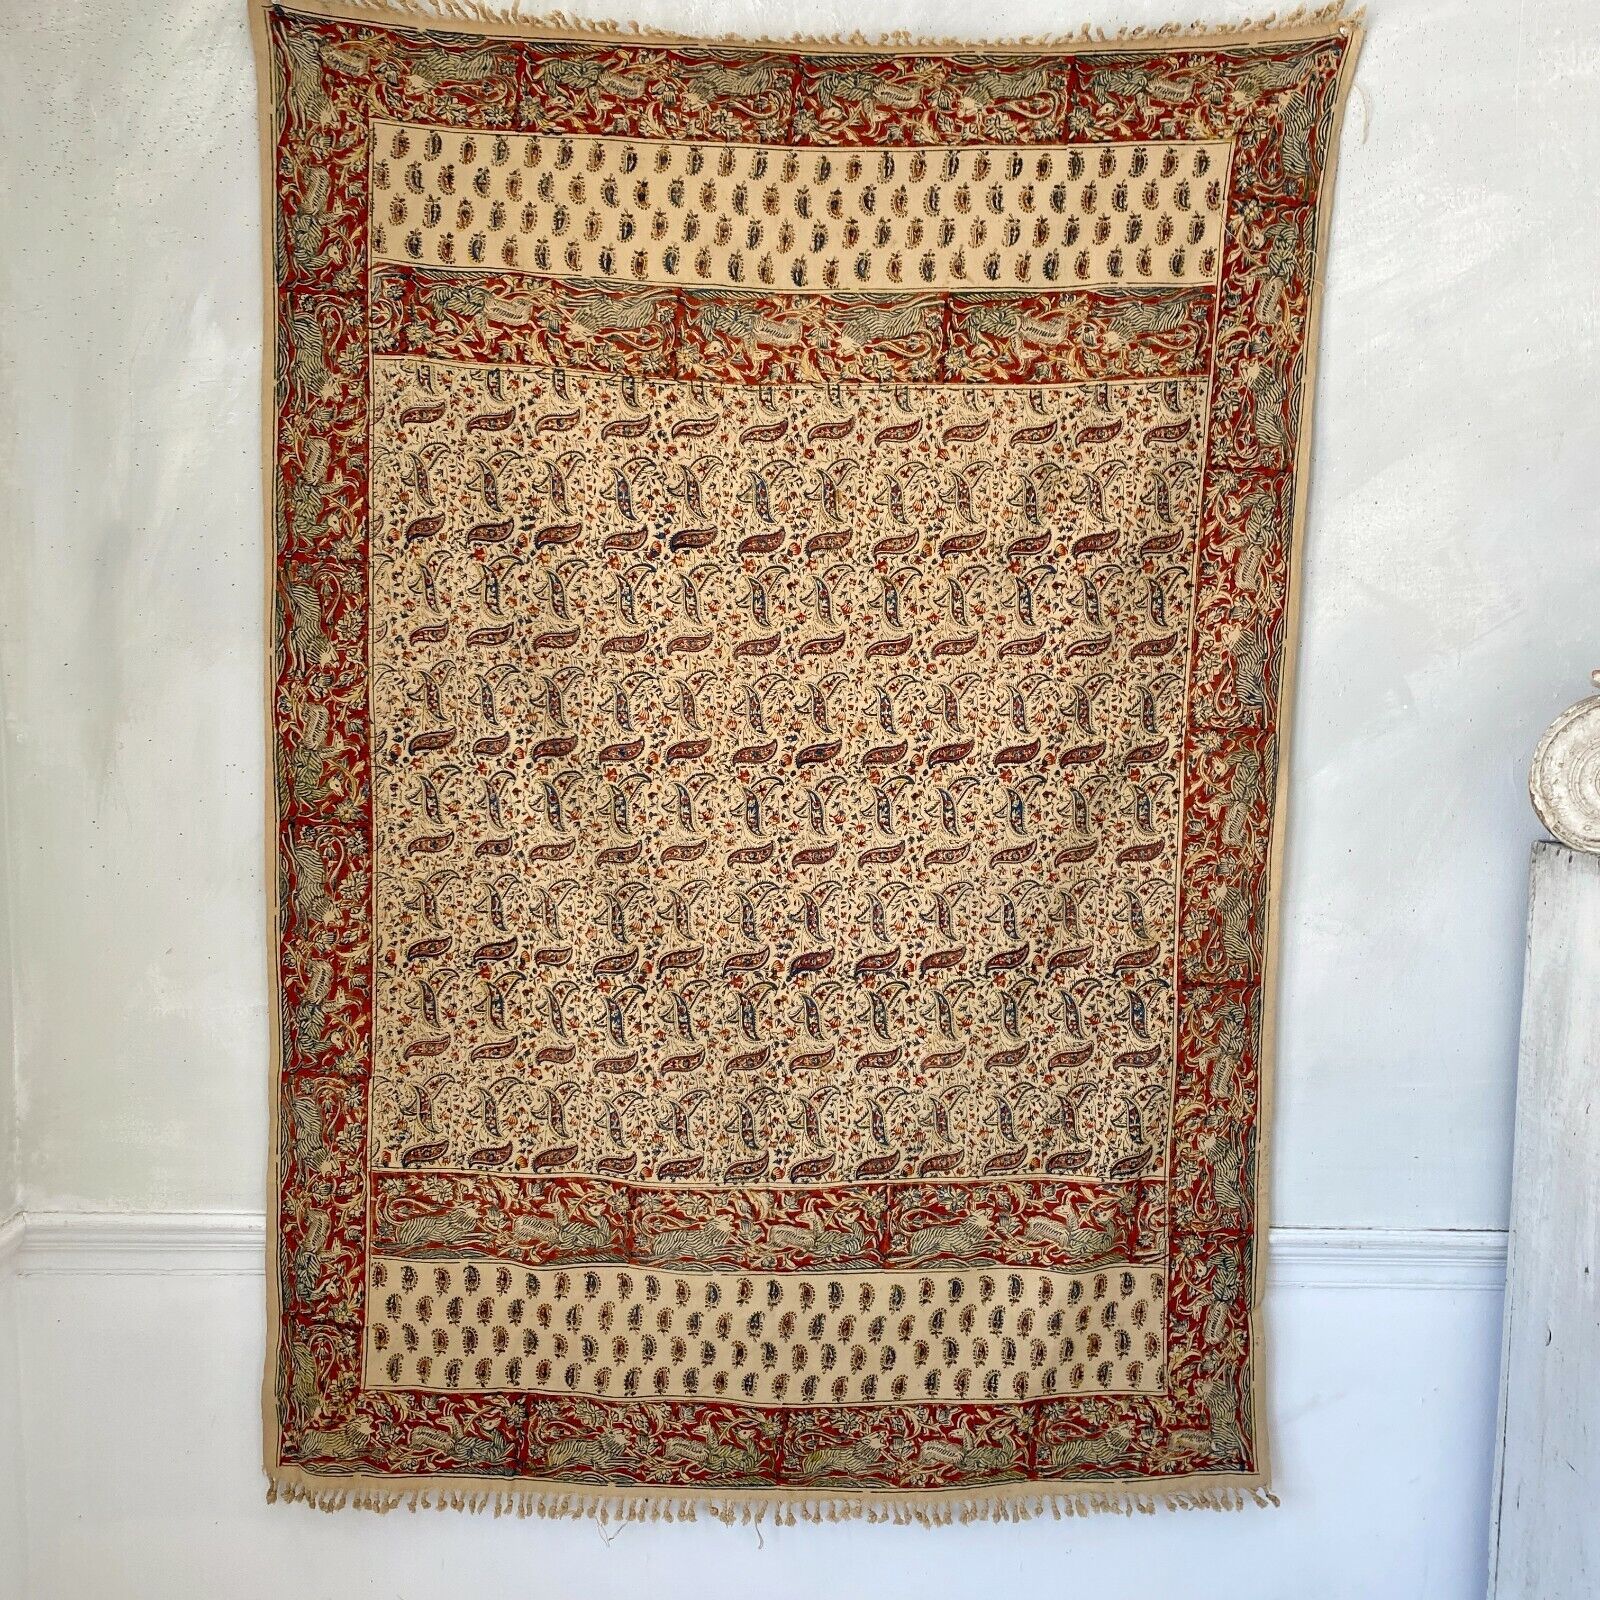 Vintage kalamkari textile paisley tablecloth bedcover hanging textile upholstery